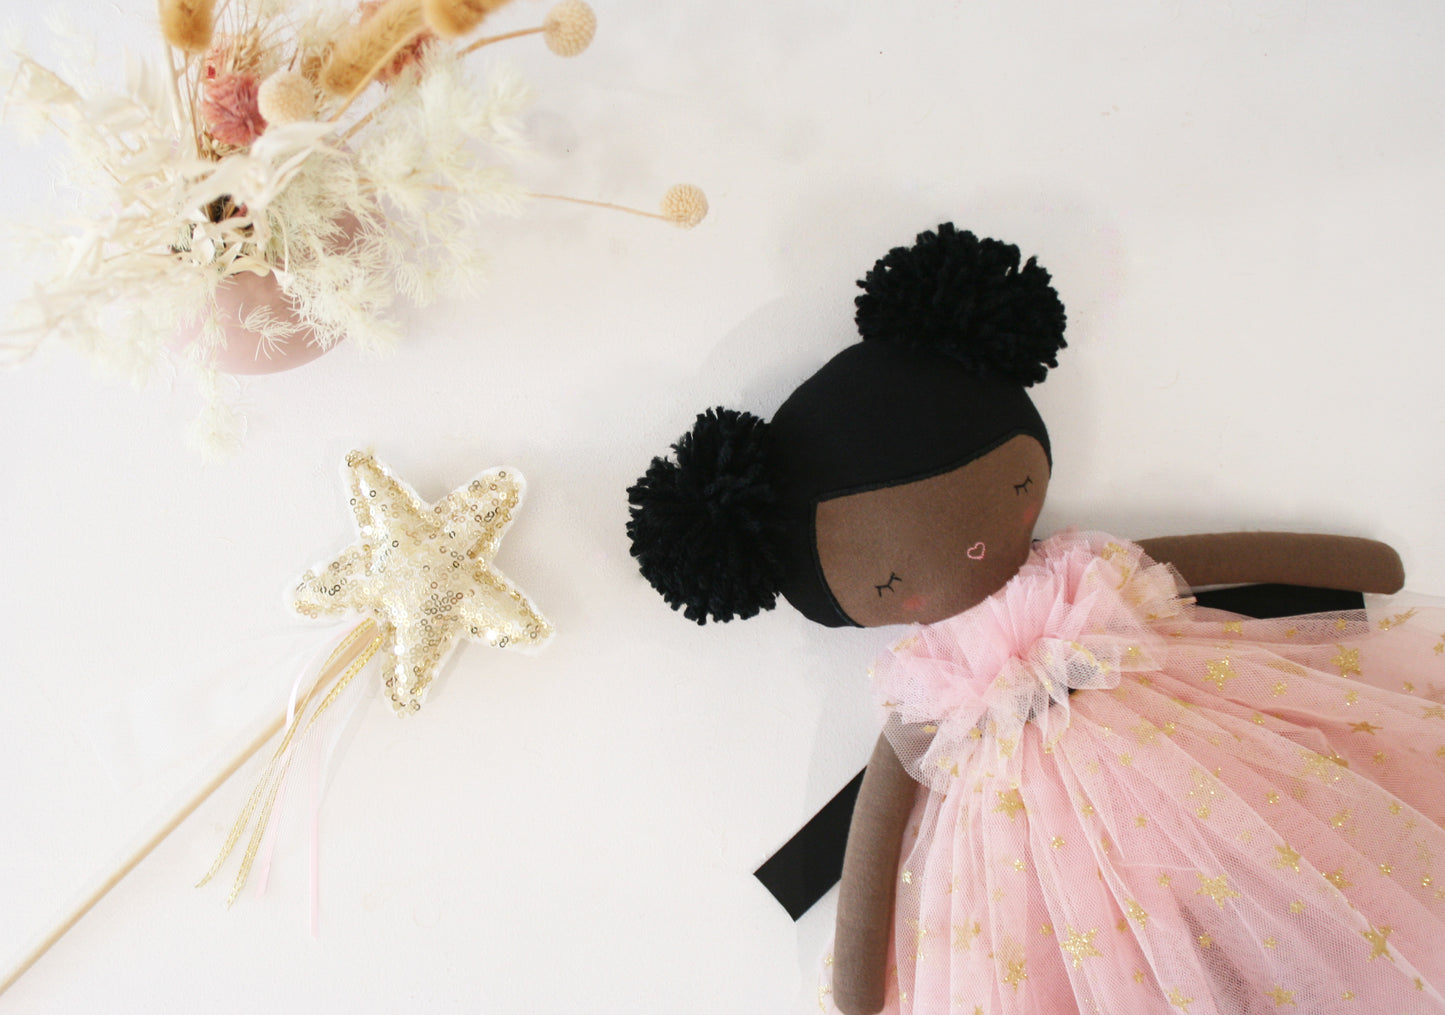 Alimrose Halle Ballerina Doll 48cm (Darker Brown & Ebony)